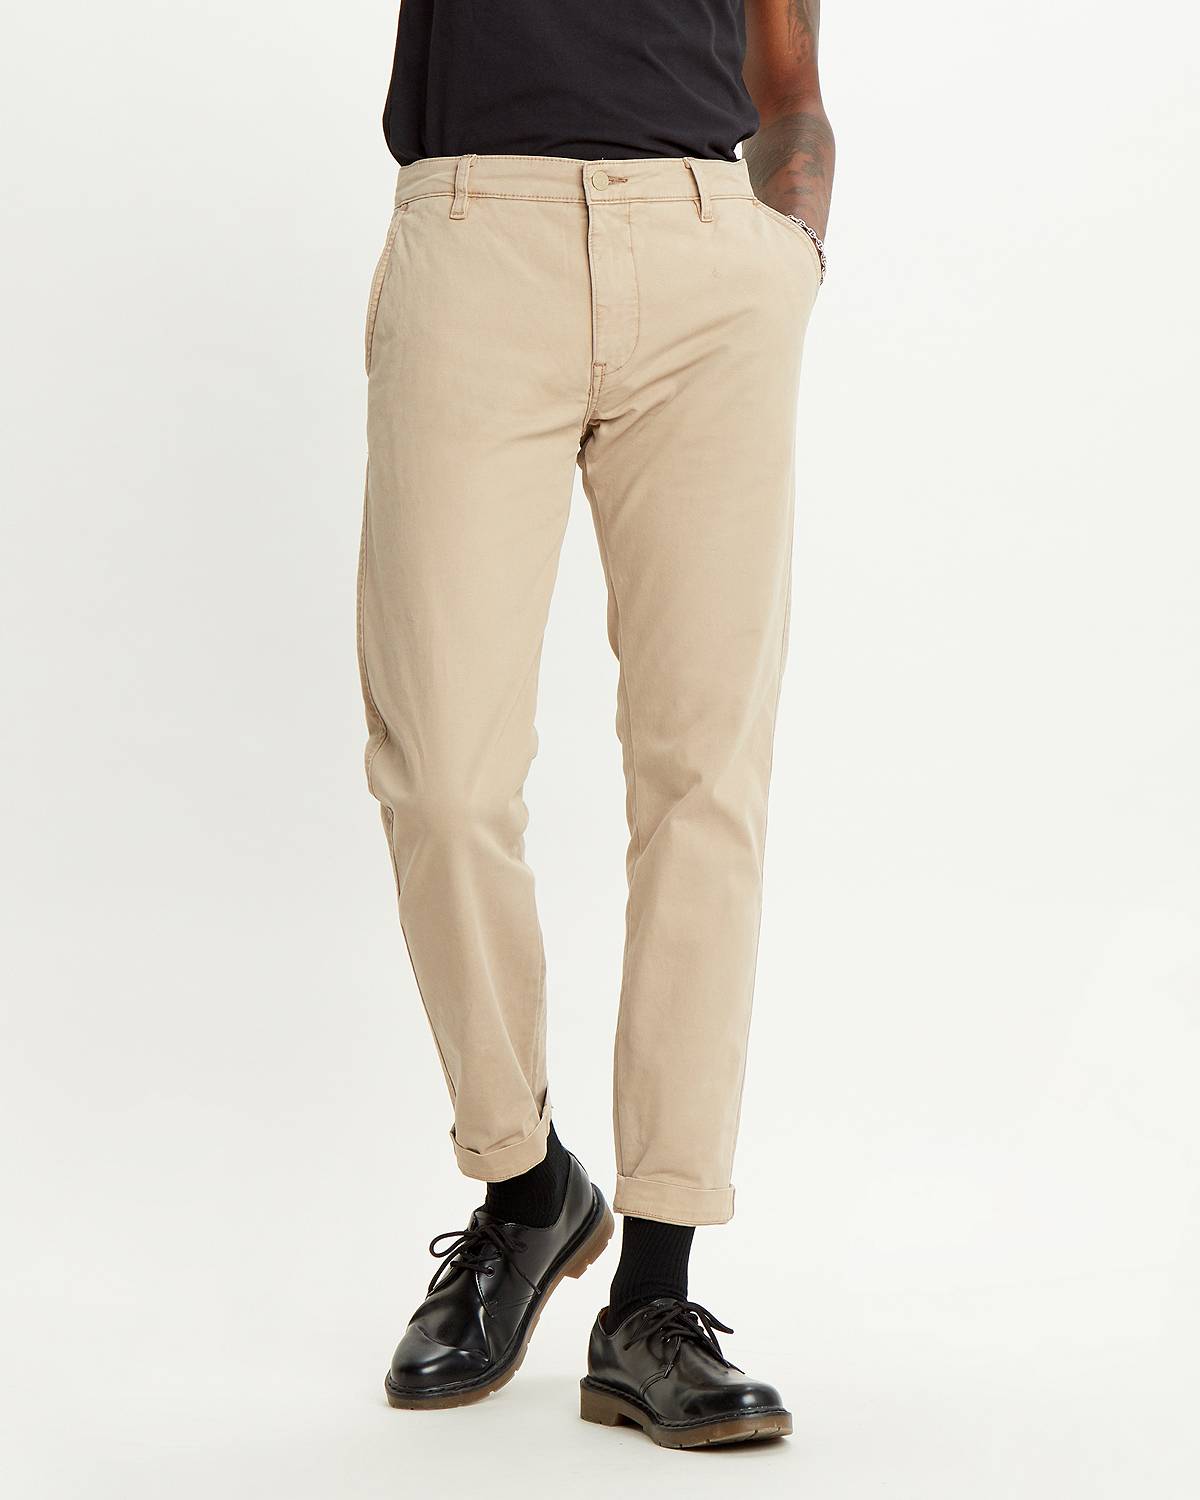 Men's Stretch Pants: Shop Men's Sweatpants, Cargo & Chino Styles